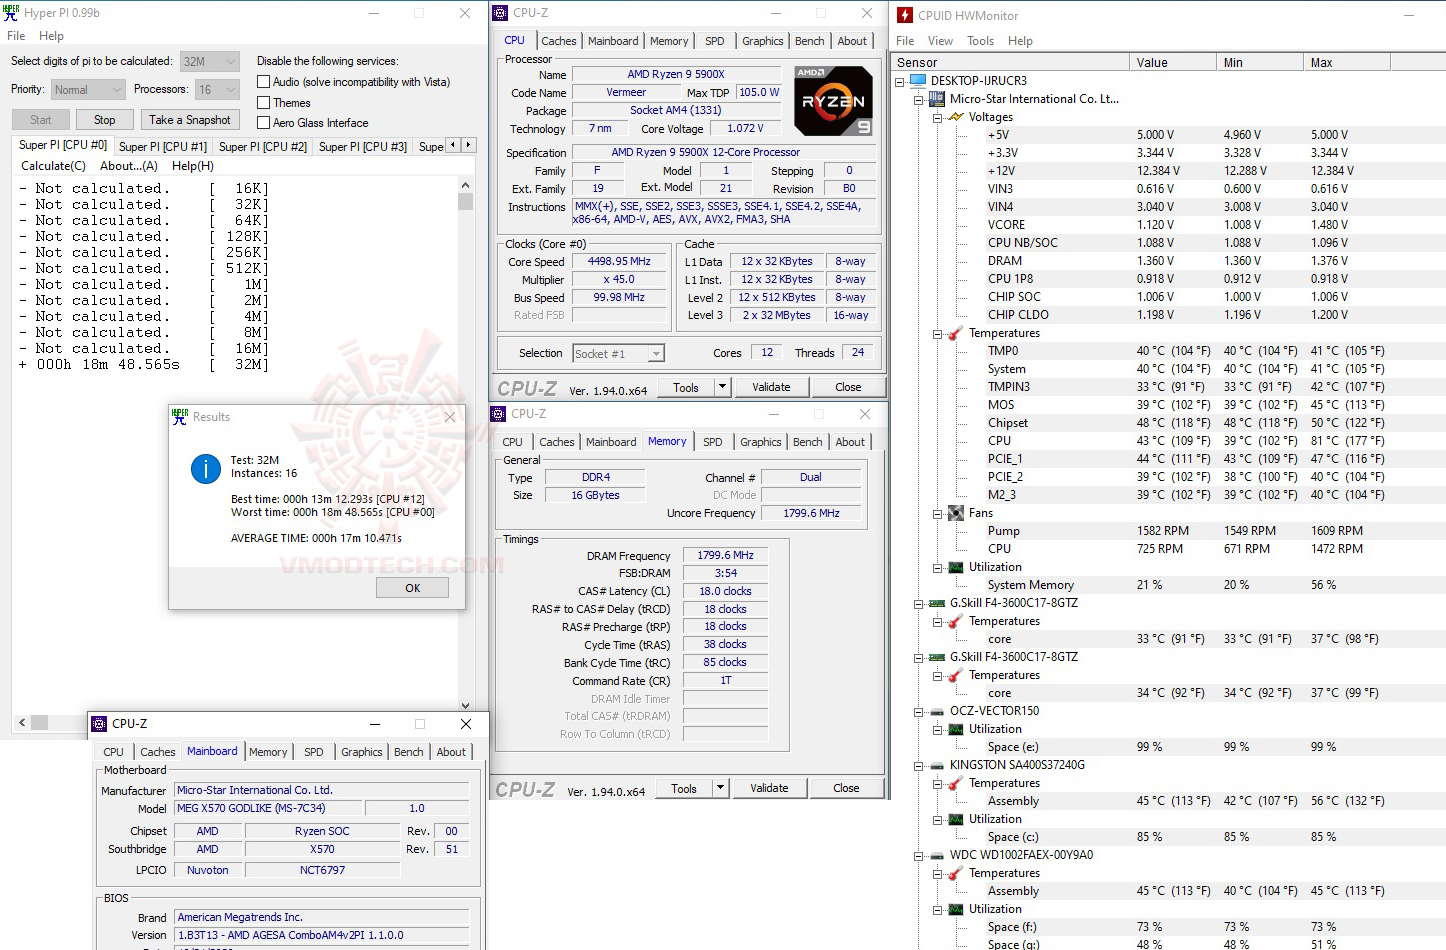 h32 2 AMD RYZEN 9 5900X PROCESSOR REVIEW